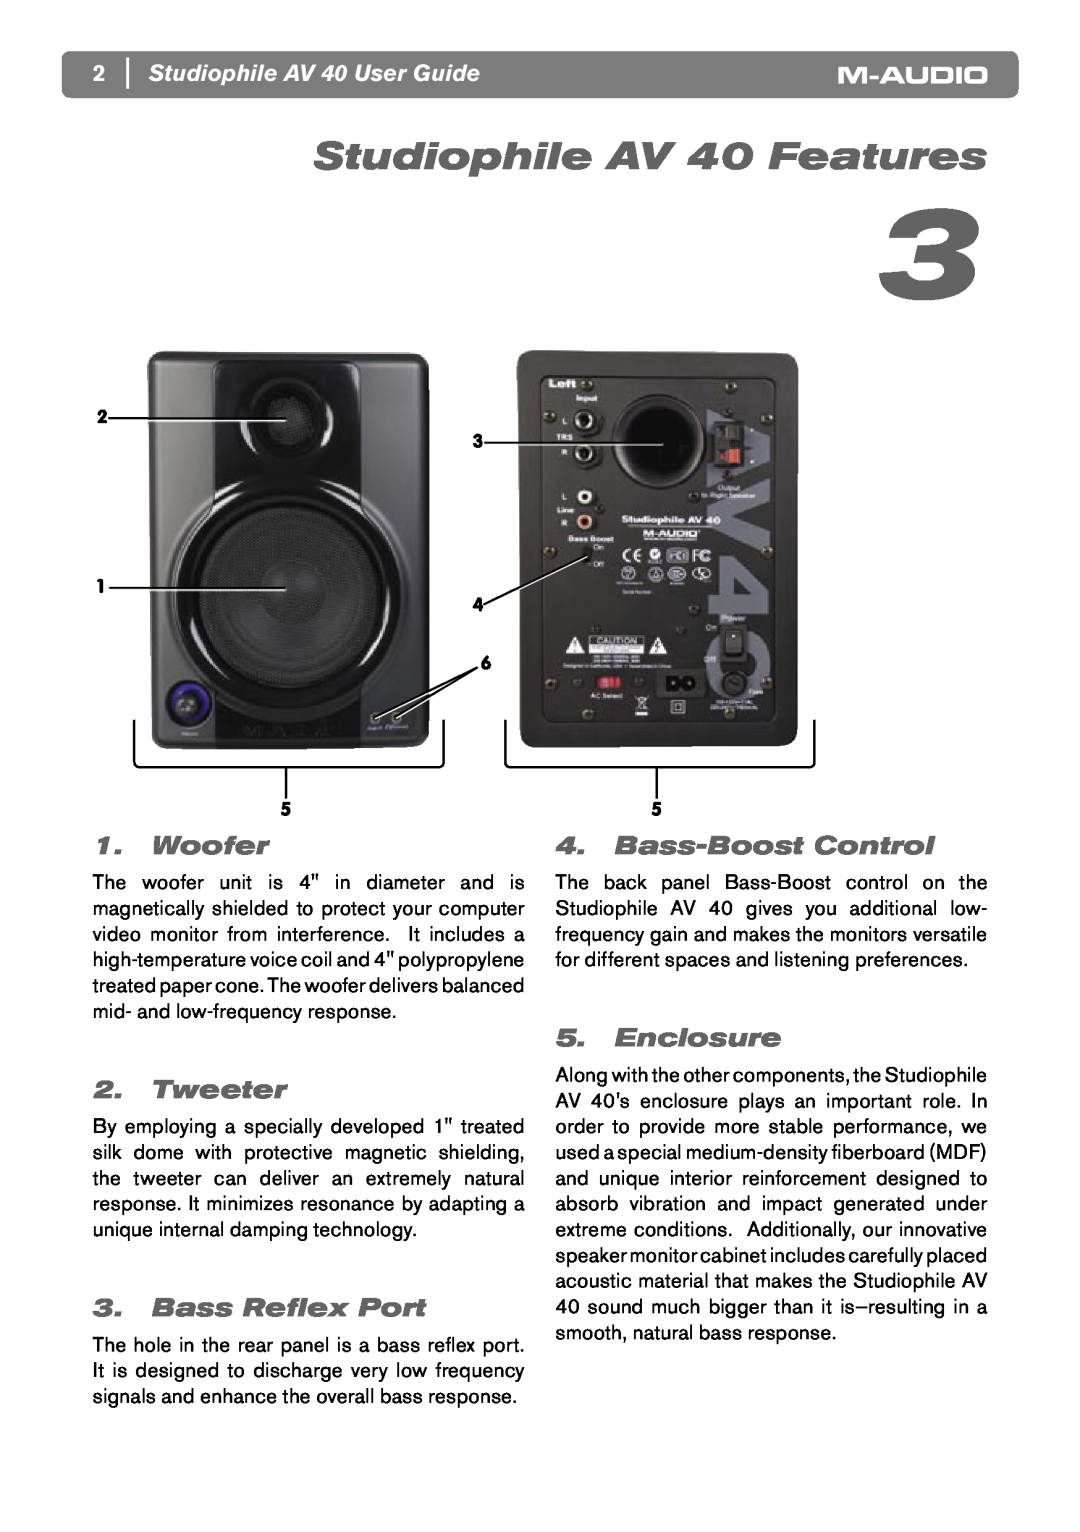 M-Audio AV40 manual Studiophile AV 40 Features, Woofer, Tweeter, Bass Reﬂex Port, Bass-BoostControl, Enclosure 